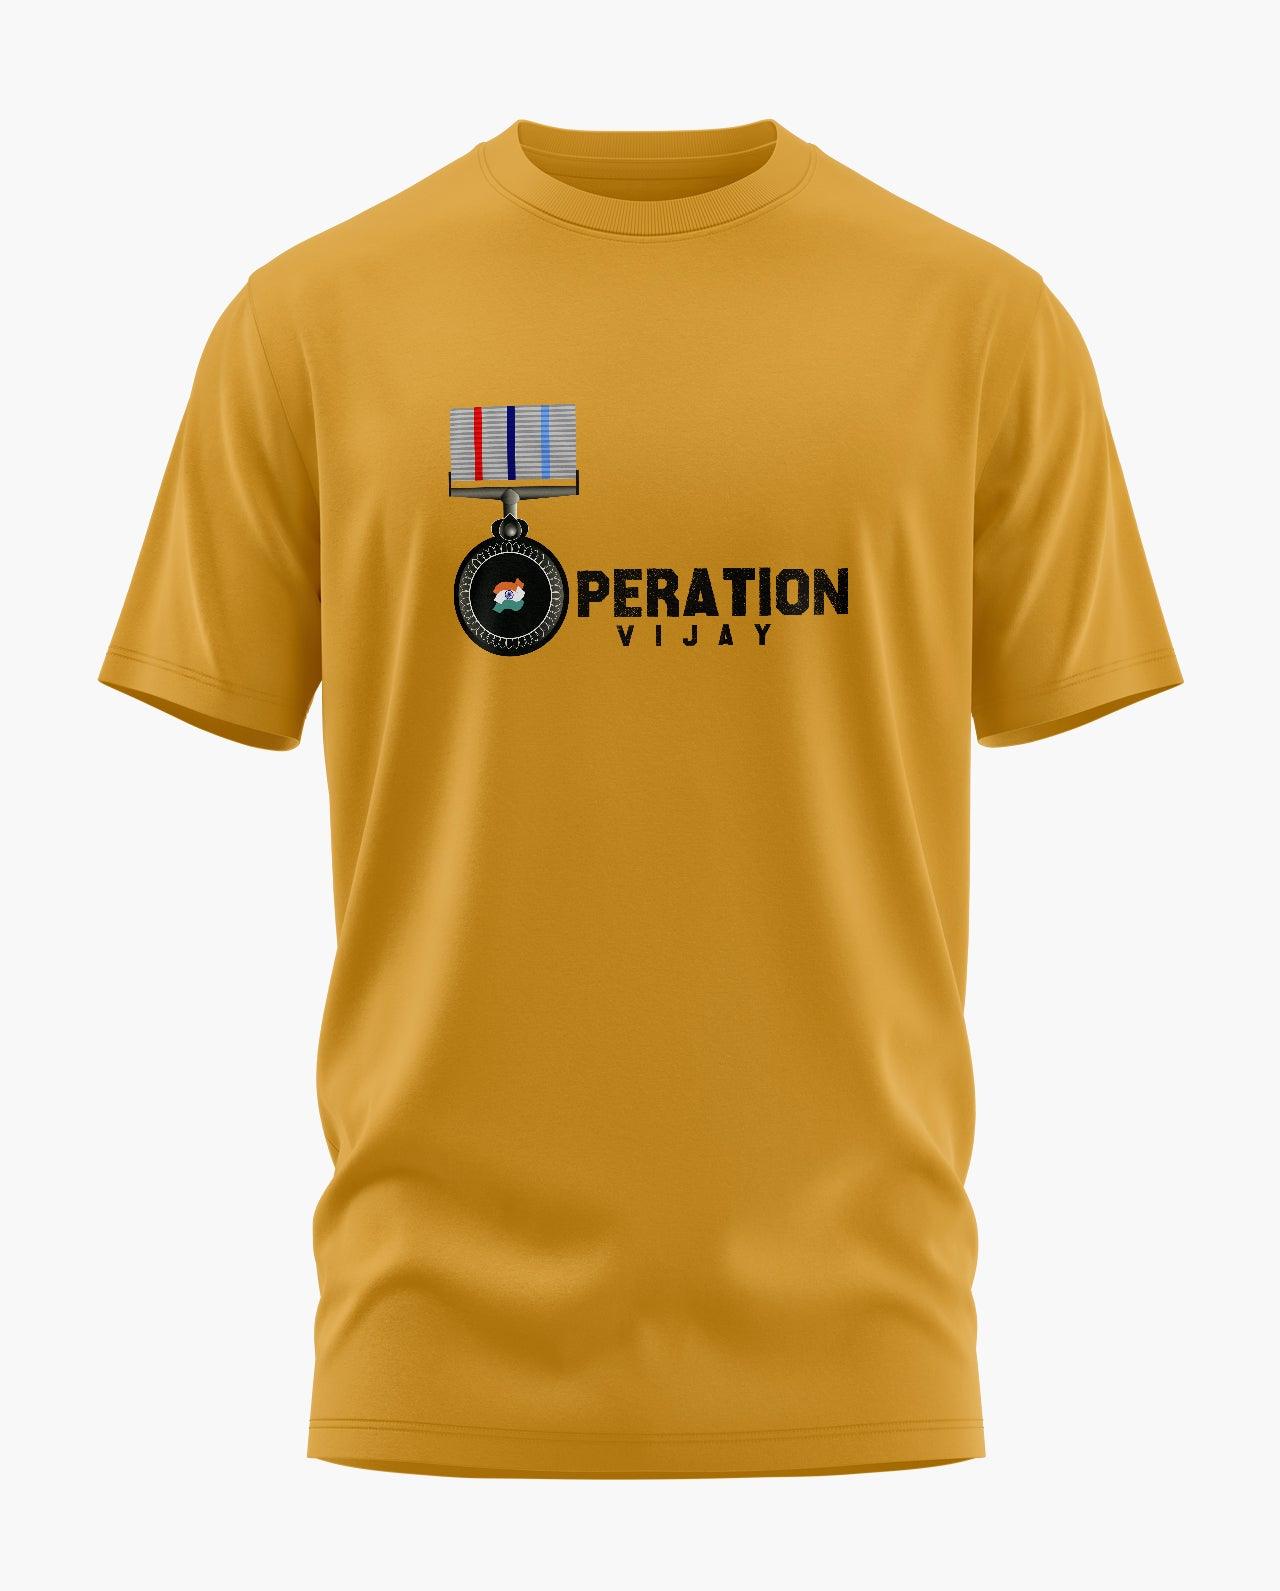 Operation Vijay Medal T-Shirt - Aero Armour